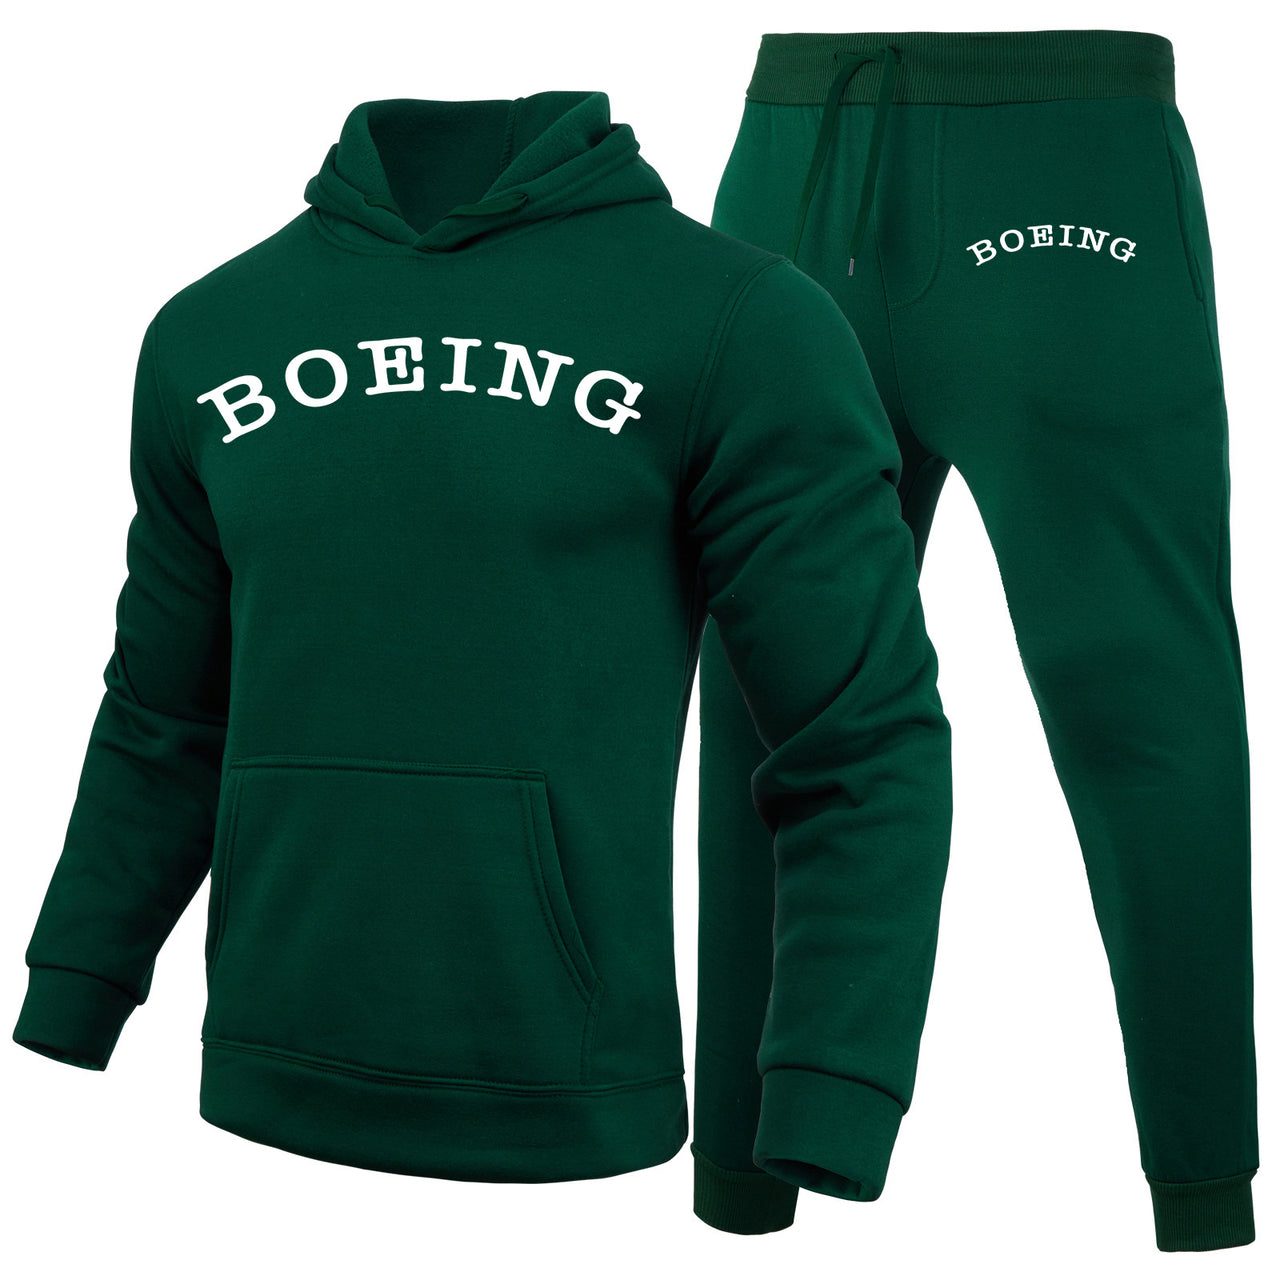 Special BOEING Text Designed Hoodies & Sweatpants Set